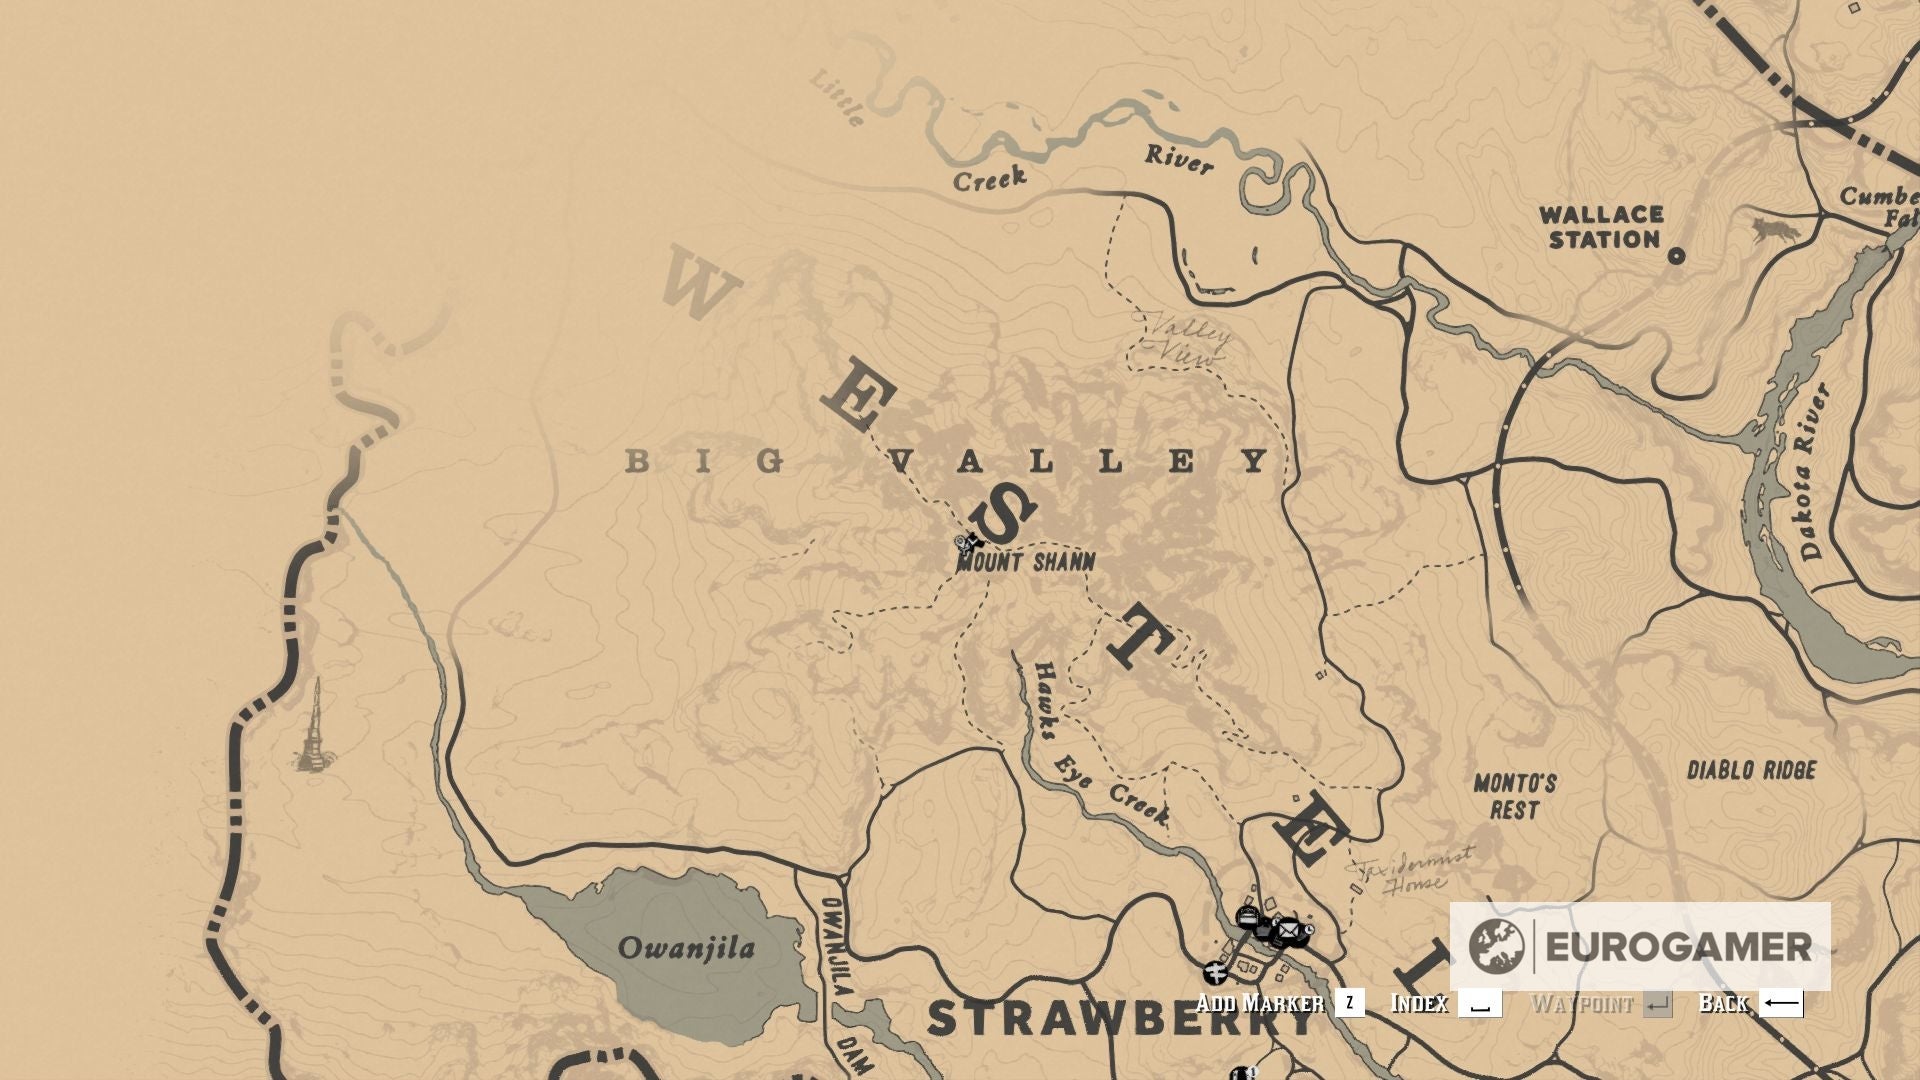 Dead Redemption 2 Landmarks of Riches Map locations | Eurogamer.net